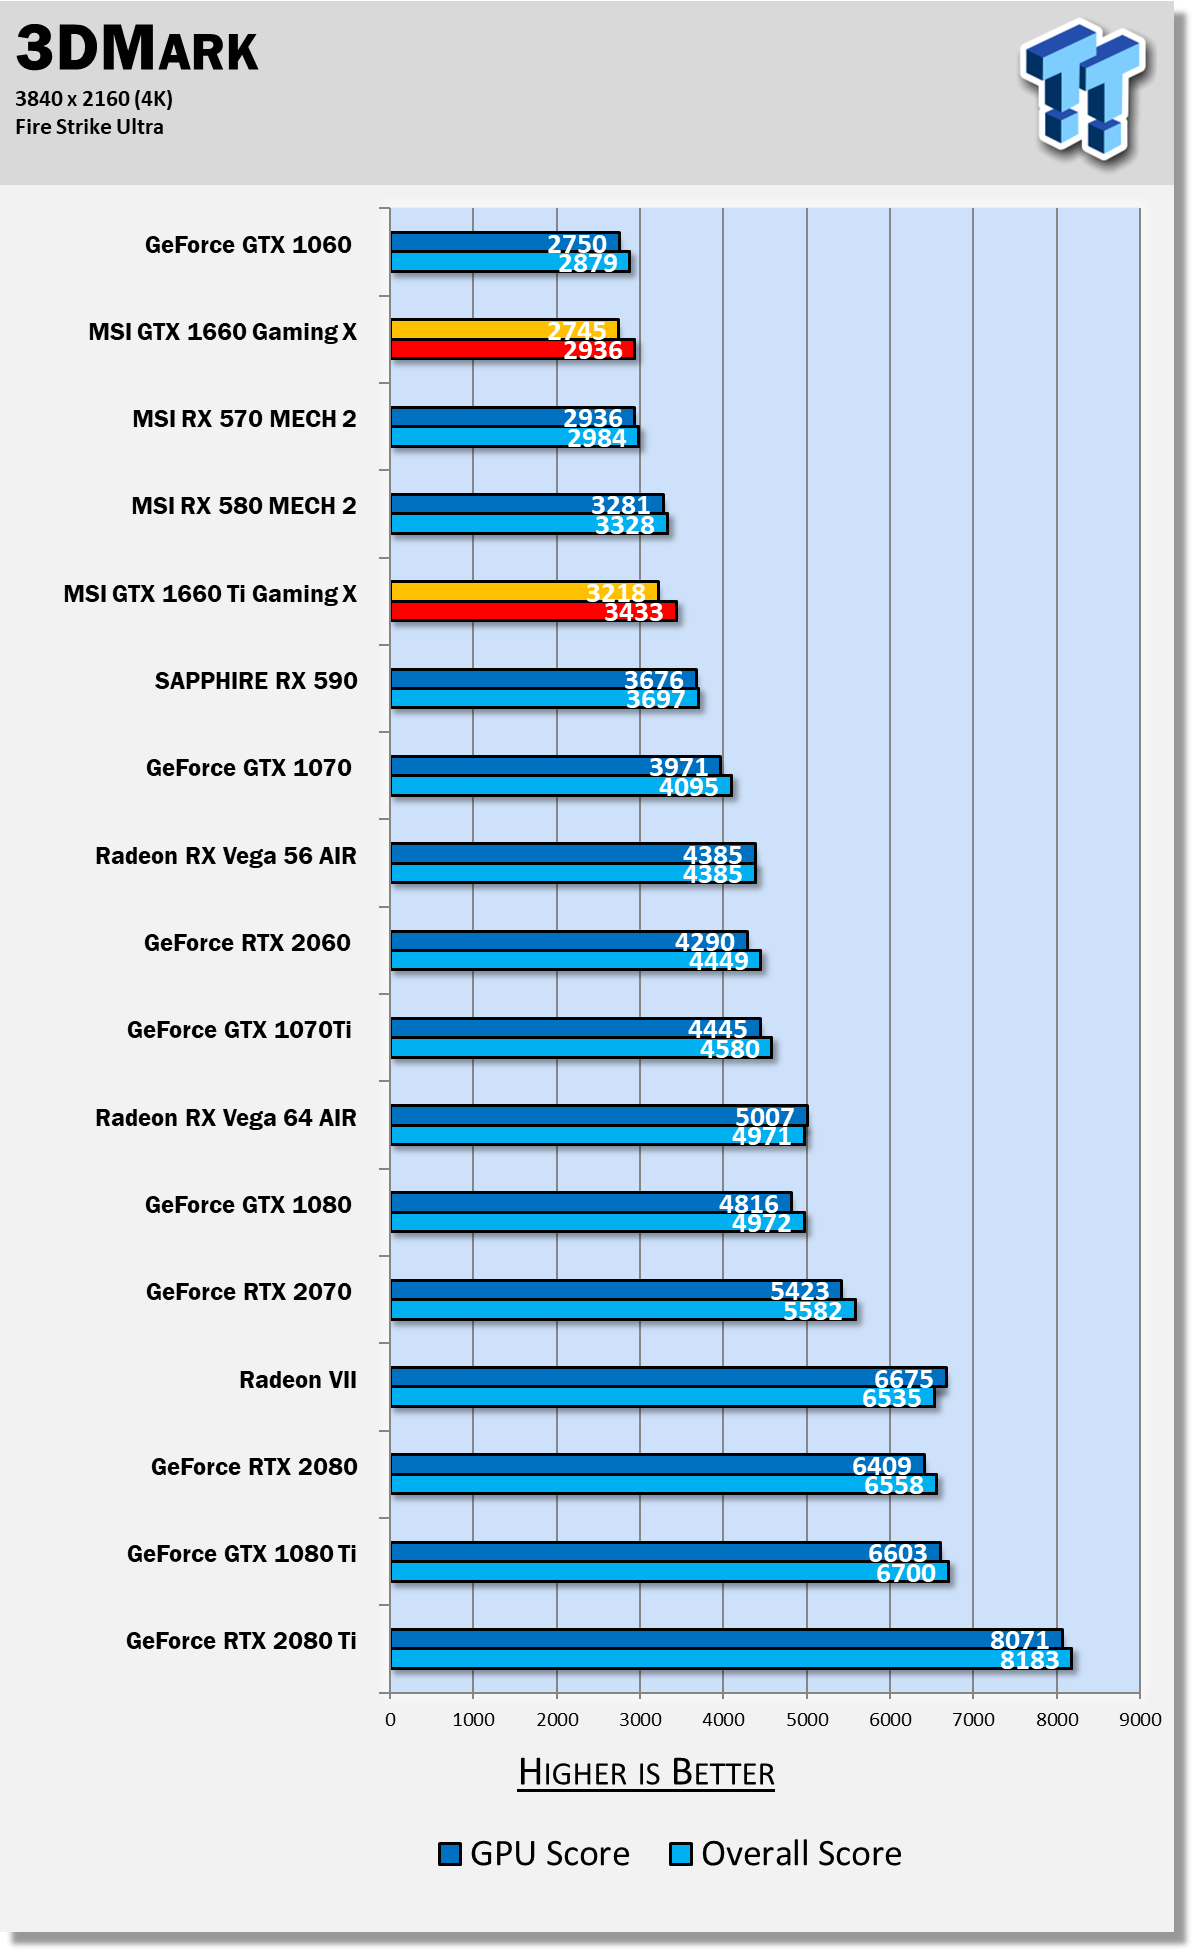 MSI GeForce GTX 1660 GAMING X & VENTUS XS Review